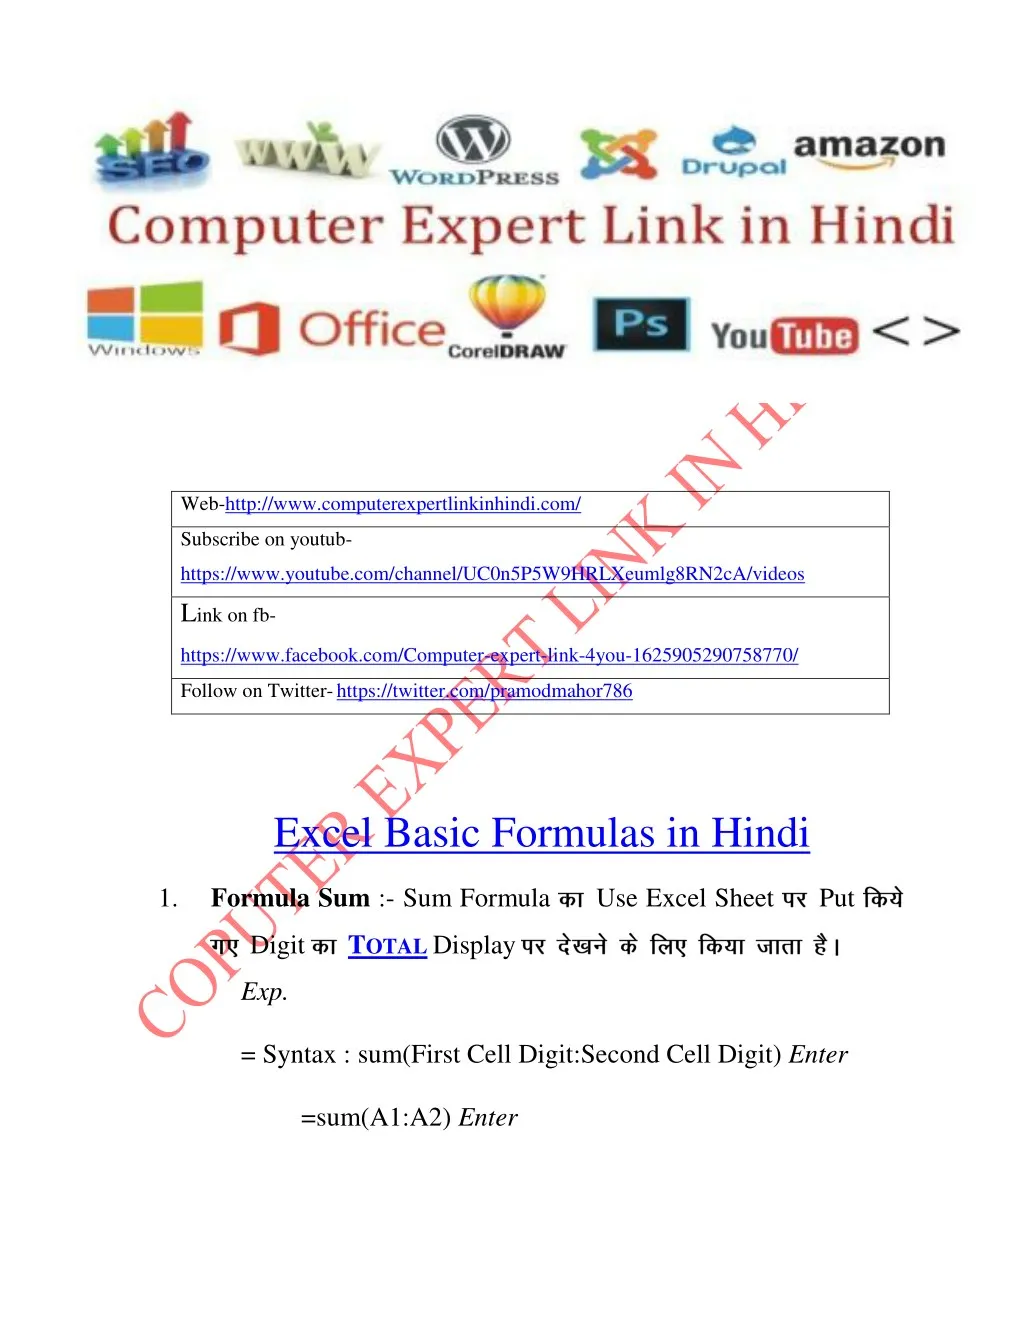 web http www computerexpertlinkinhindi com